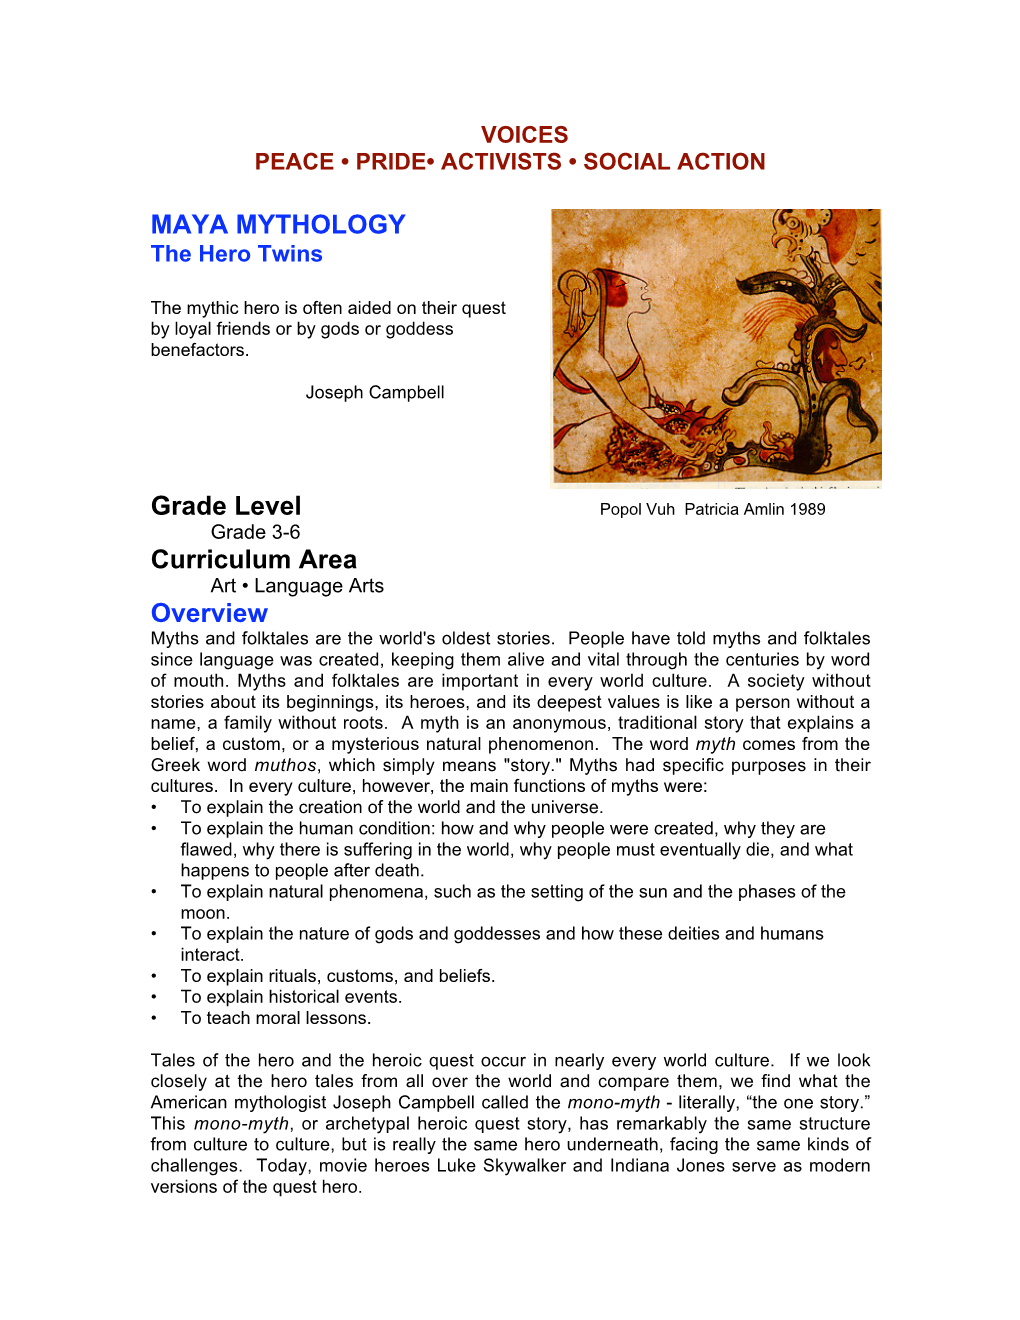 MAYA MYTHOLOGY Grade Level Curriculum Area Overview